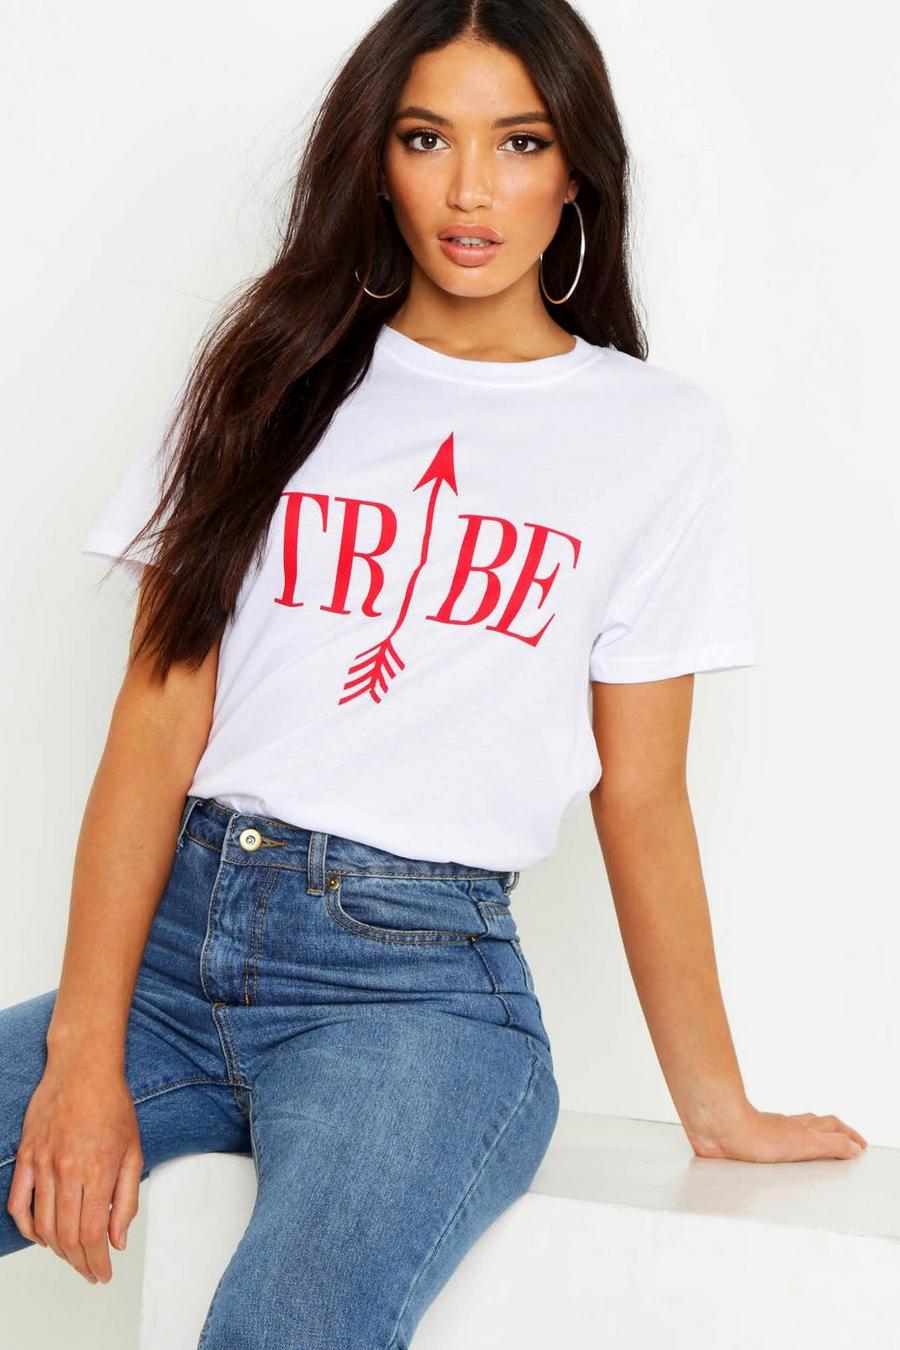 Camiseta con eslogan “Tribe” image number 1